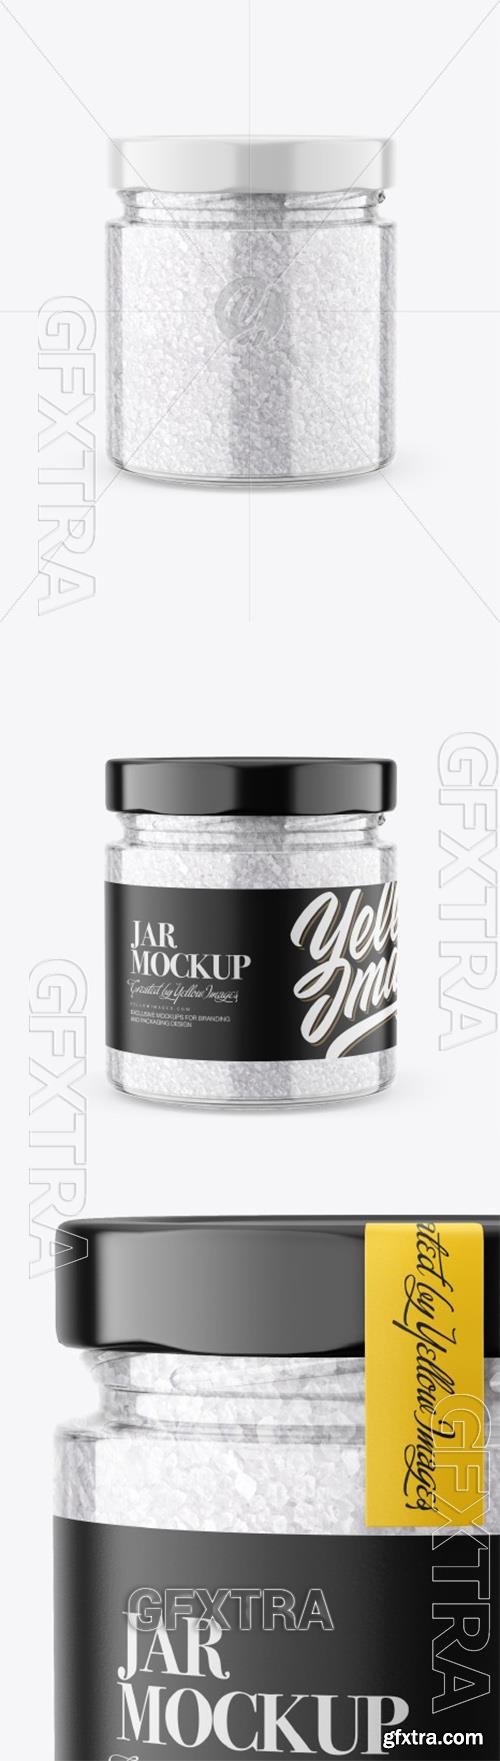 Salt Jar Mockup 53134